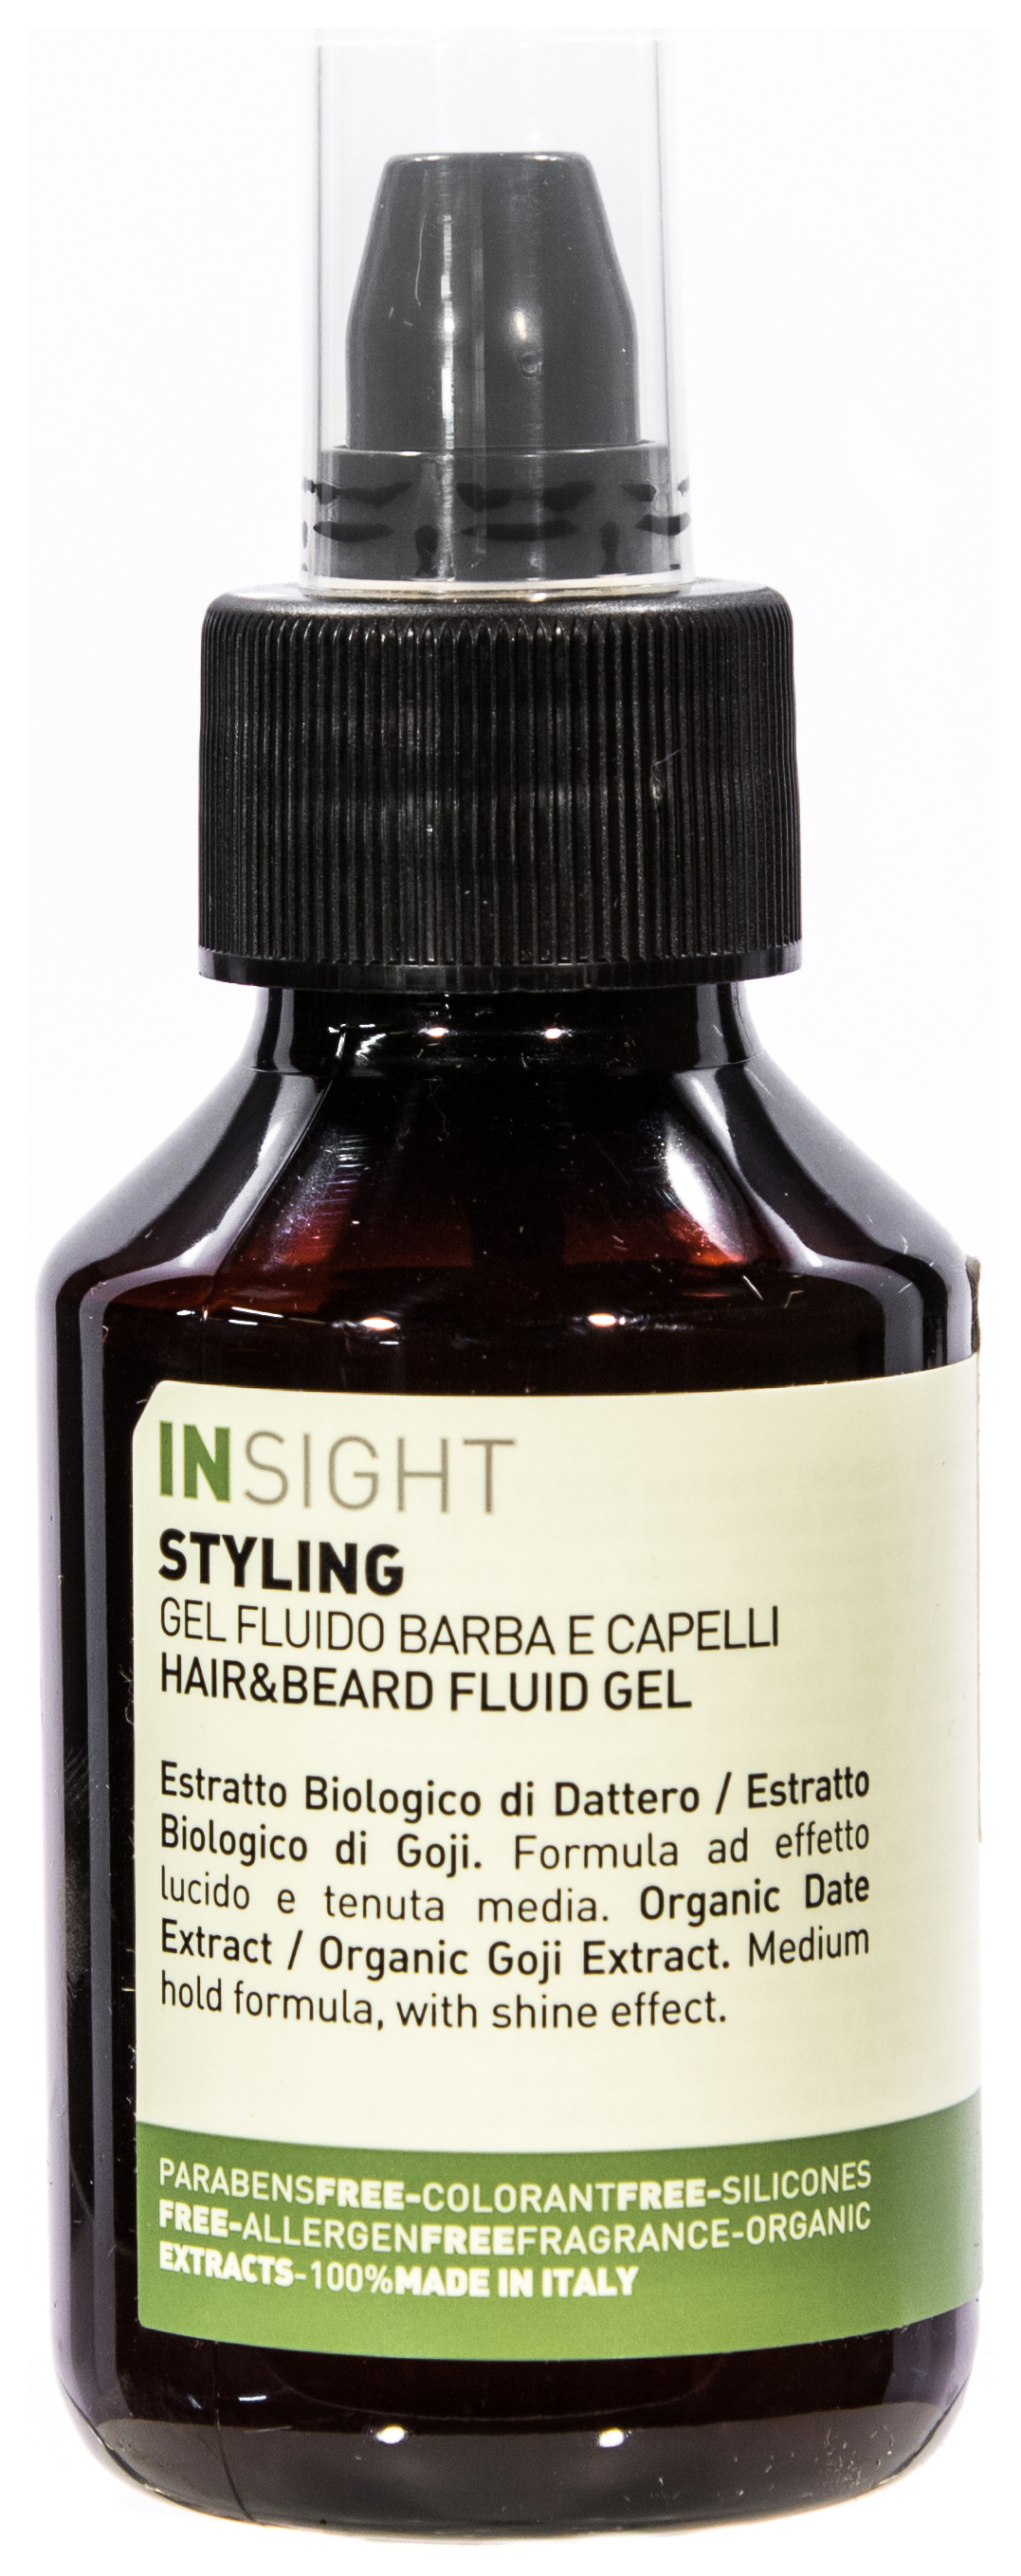 Гель-флюид для волос и бороды Insight Styling Hair Beard Fluid Gel мужской 100 мл white cosmetics мужской гель парфюм для душа 100 мл